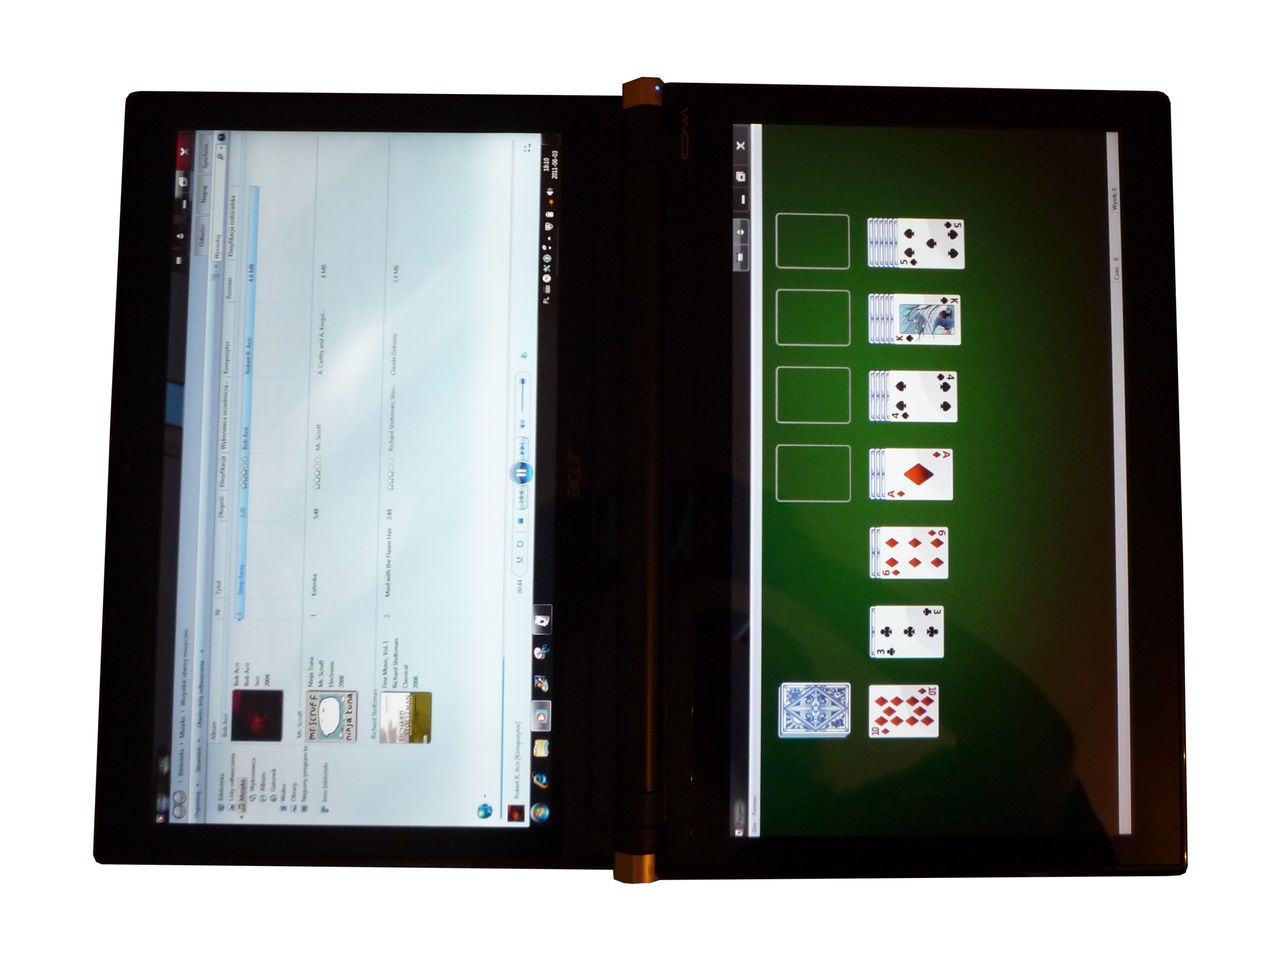 Acer Iconia Touchbook - co dwa ekrany to nie jeden!